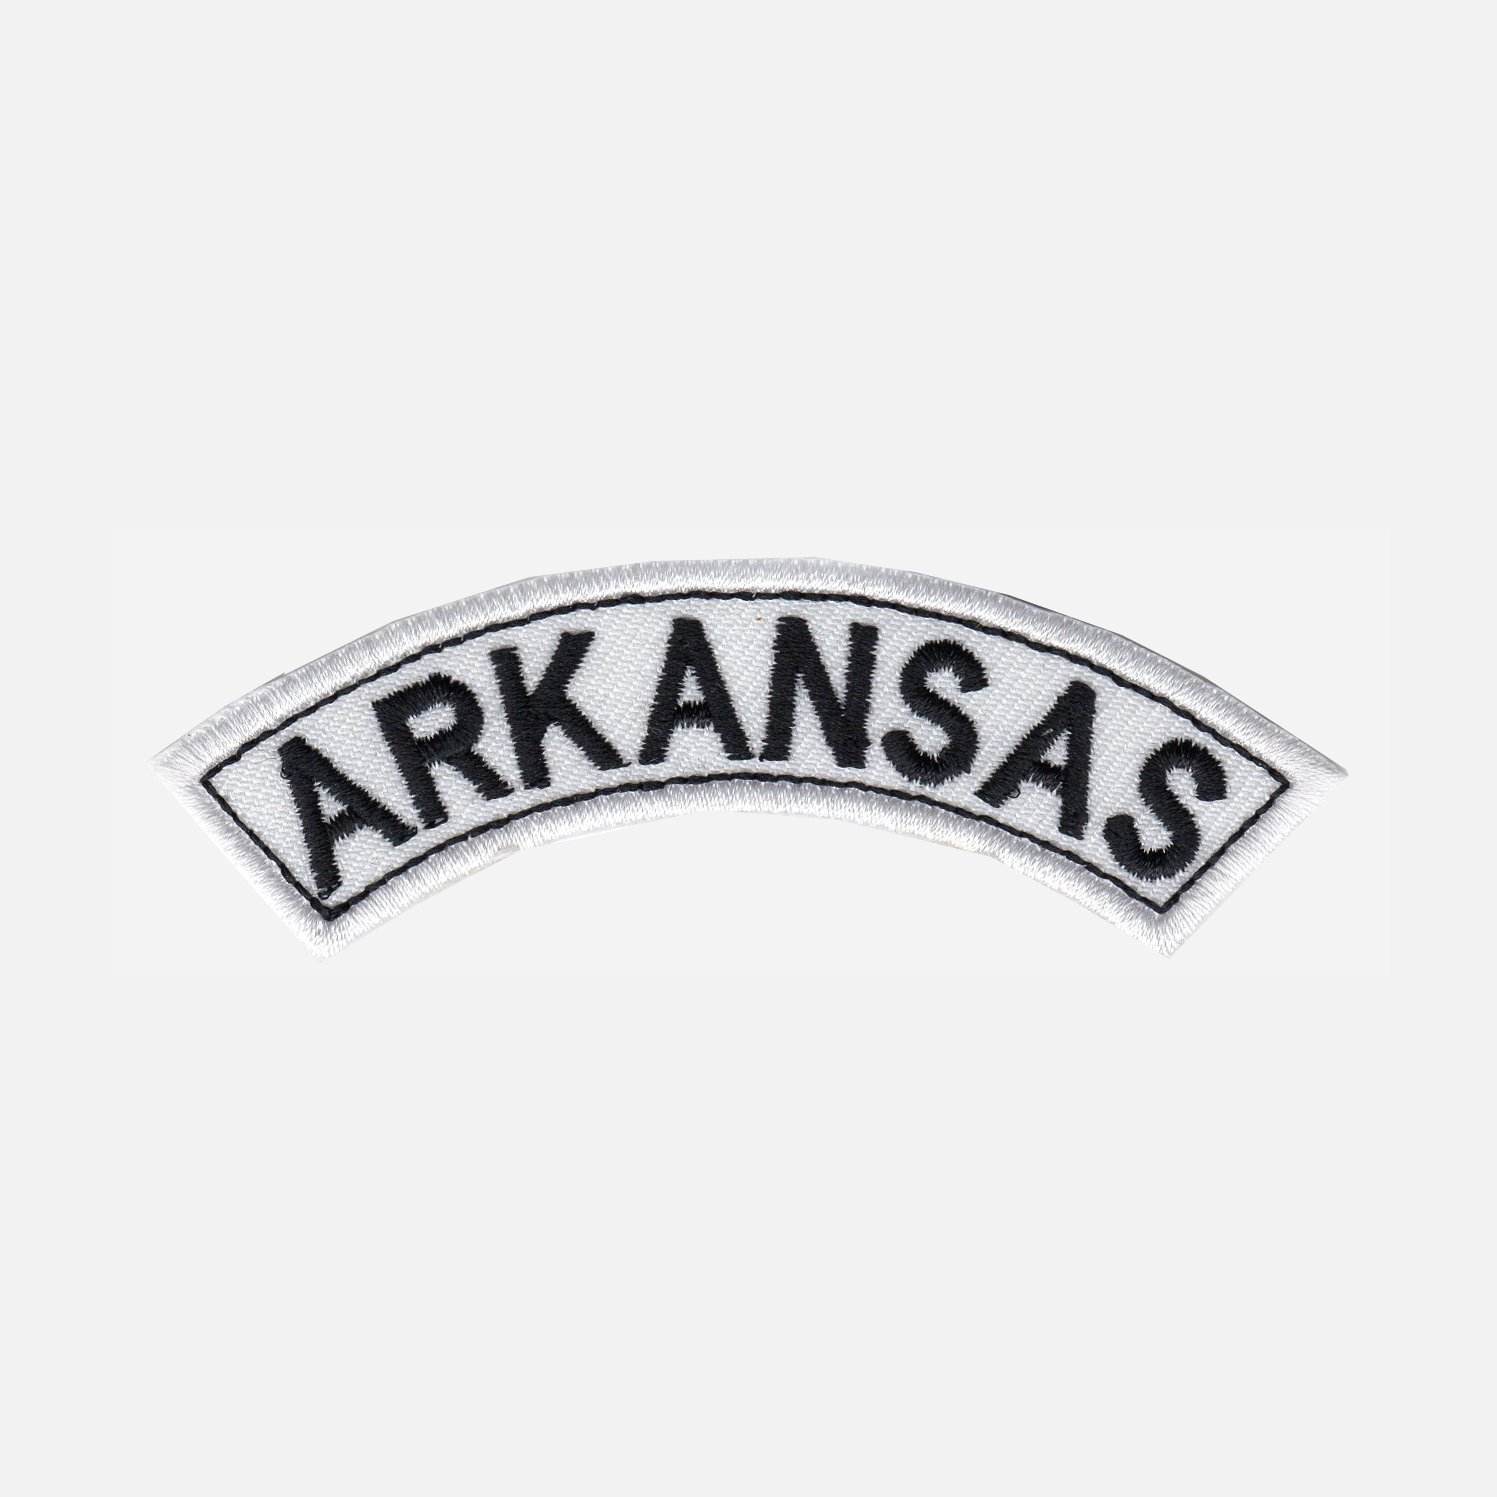 Arkansas Mini Top Rocker Embroidered Vest Patch